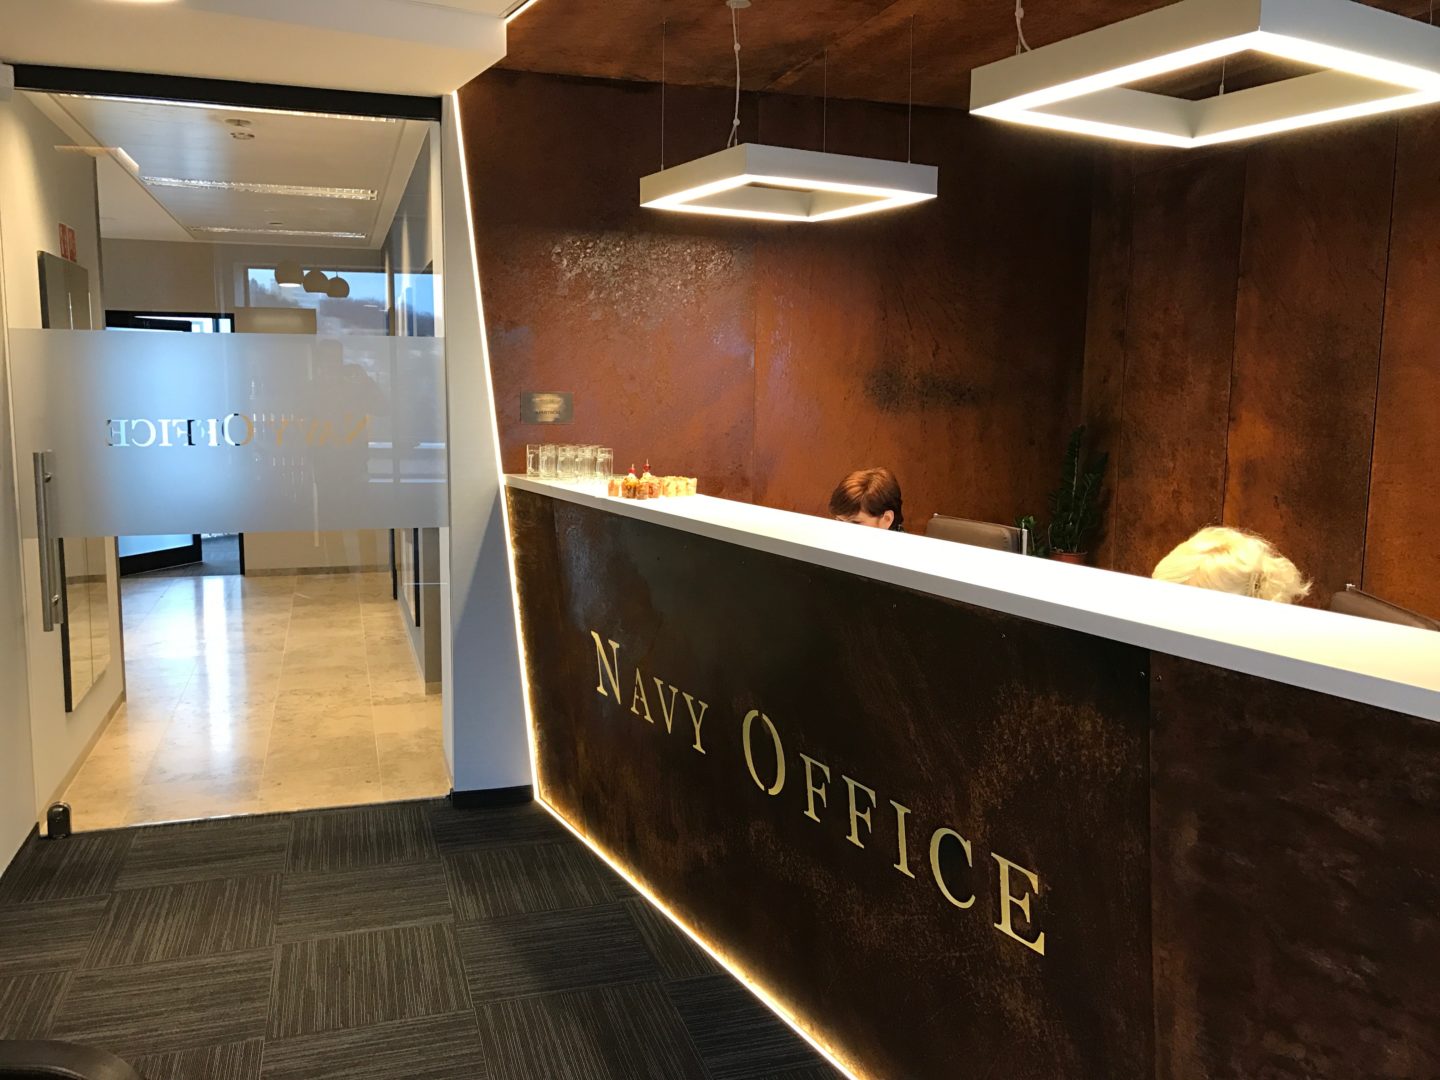 Navy-office-nowe-biura